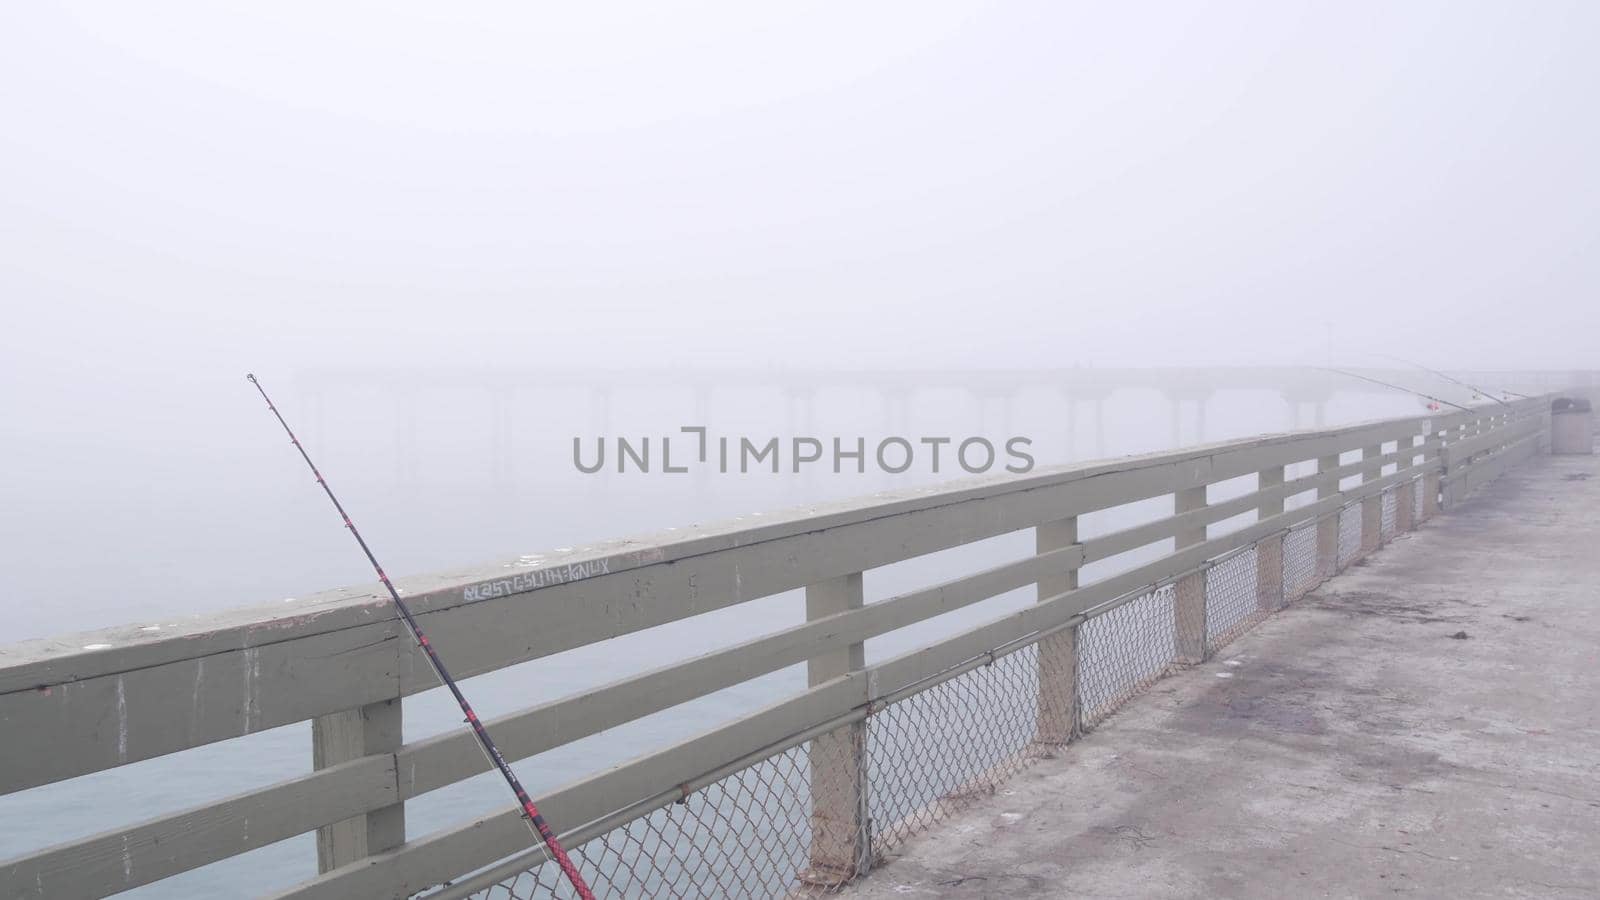 Wooden Ocean Beach pier in fog, misty calm boardwalk in haze, California coast. by DogoraSun